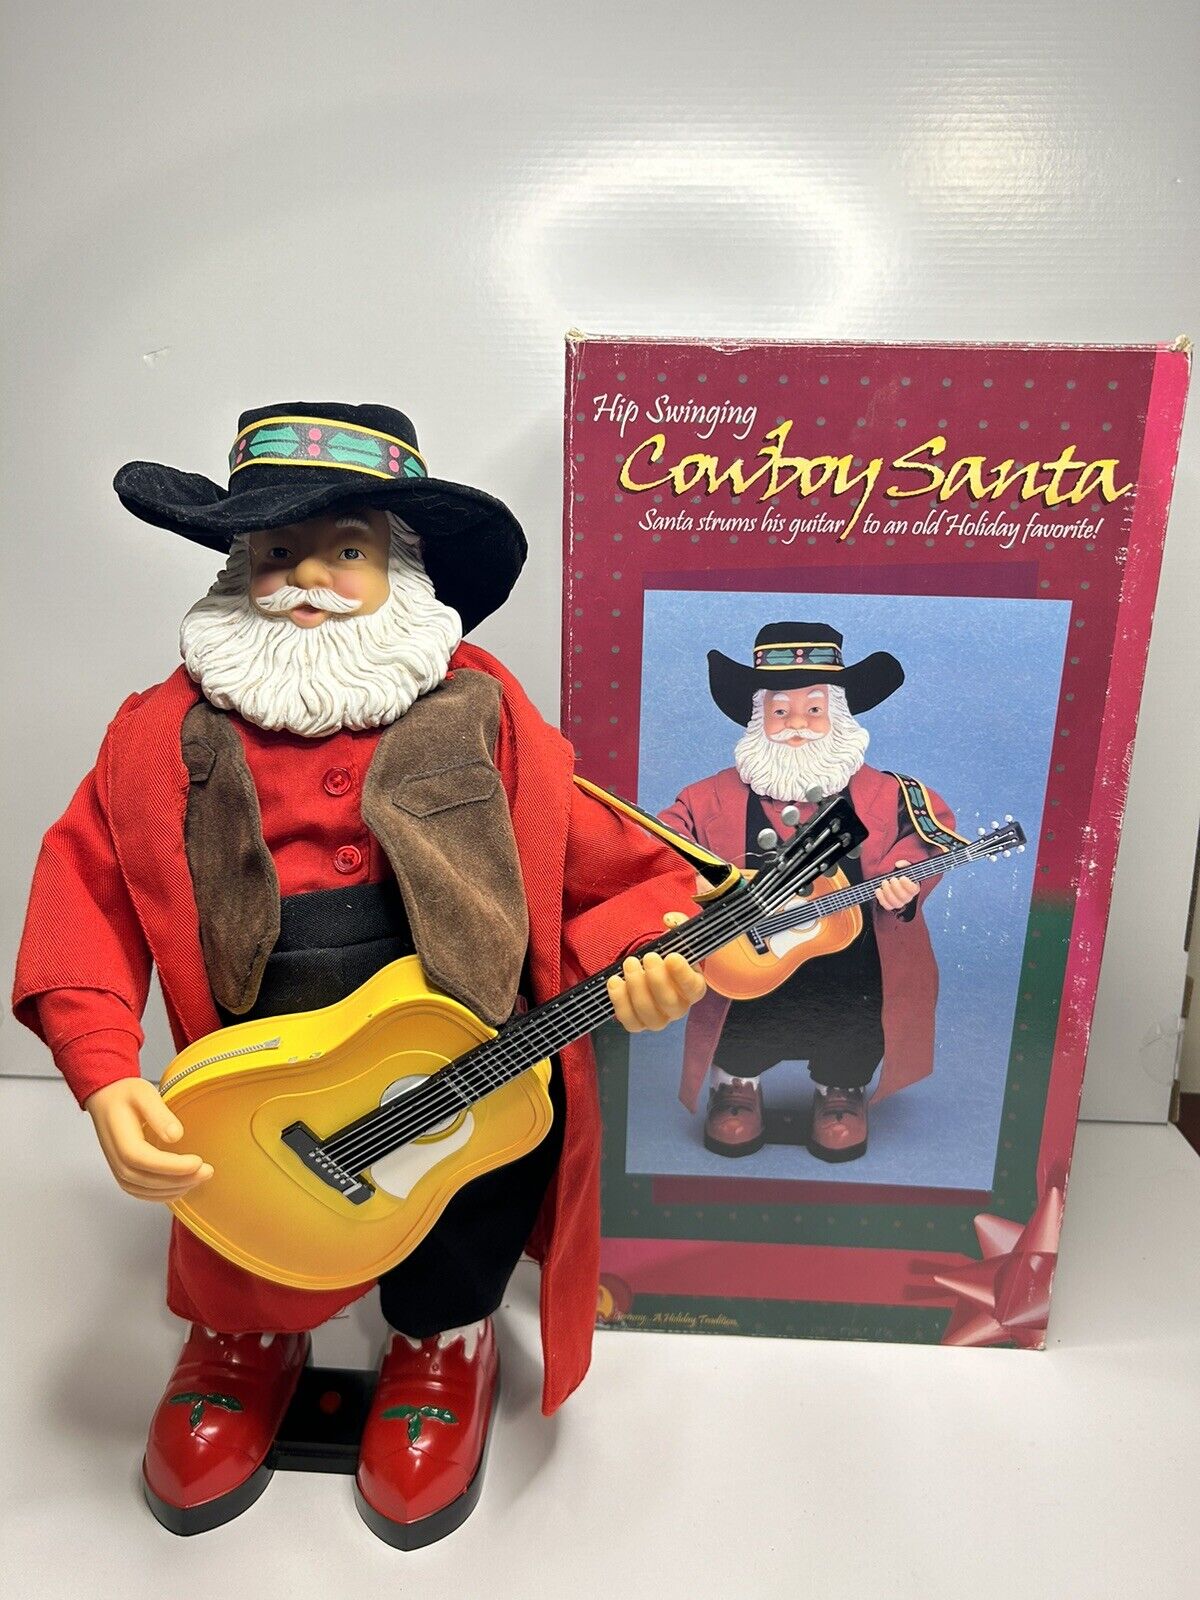 Vintage Singing Christmas Hip Swinging Cowboy Santa Tested Works